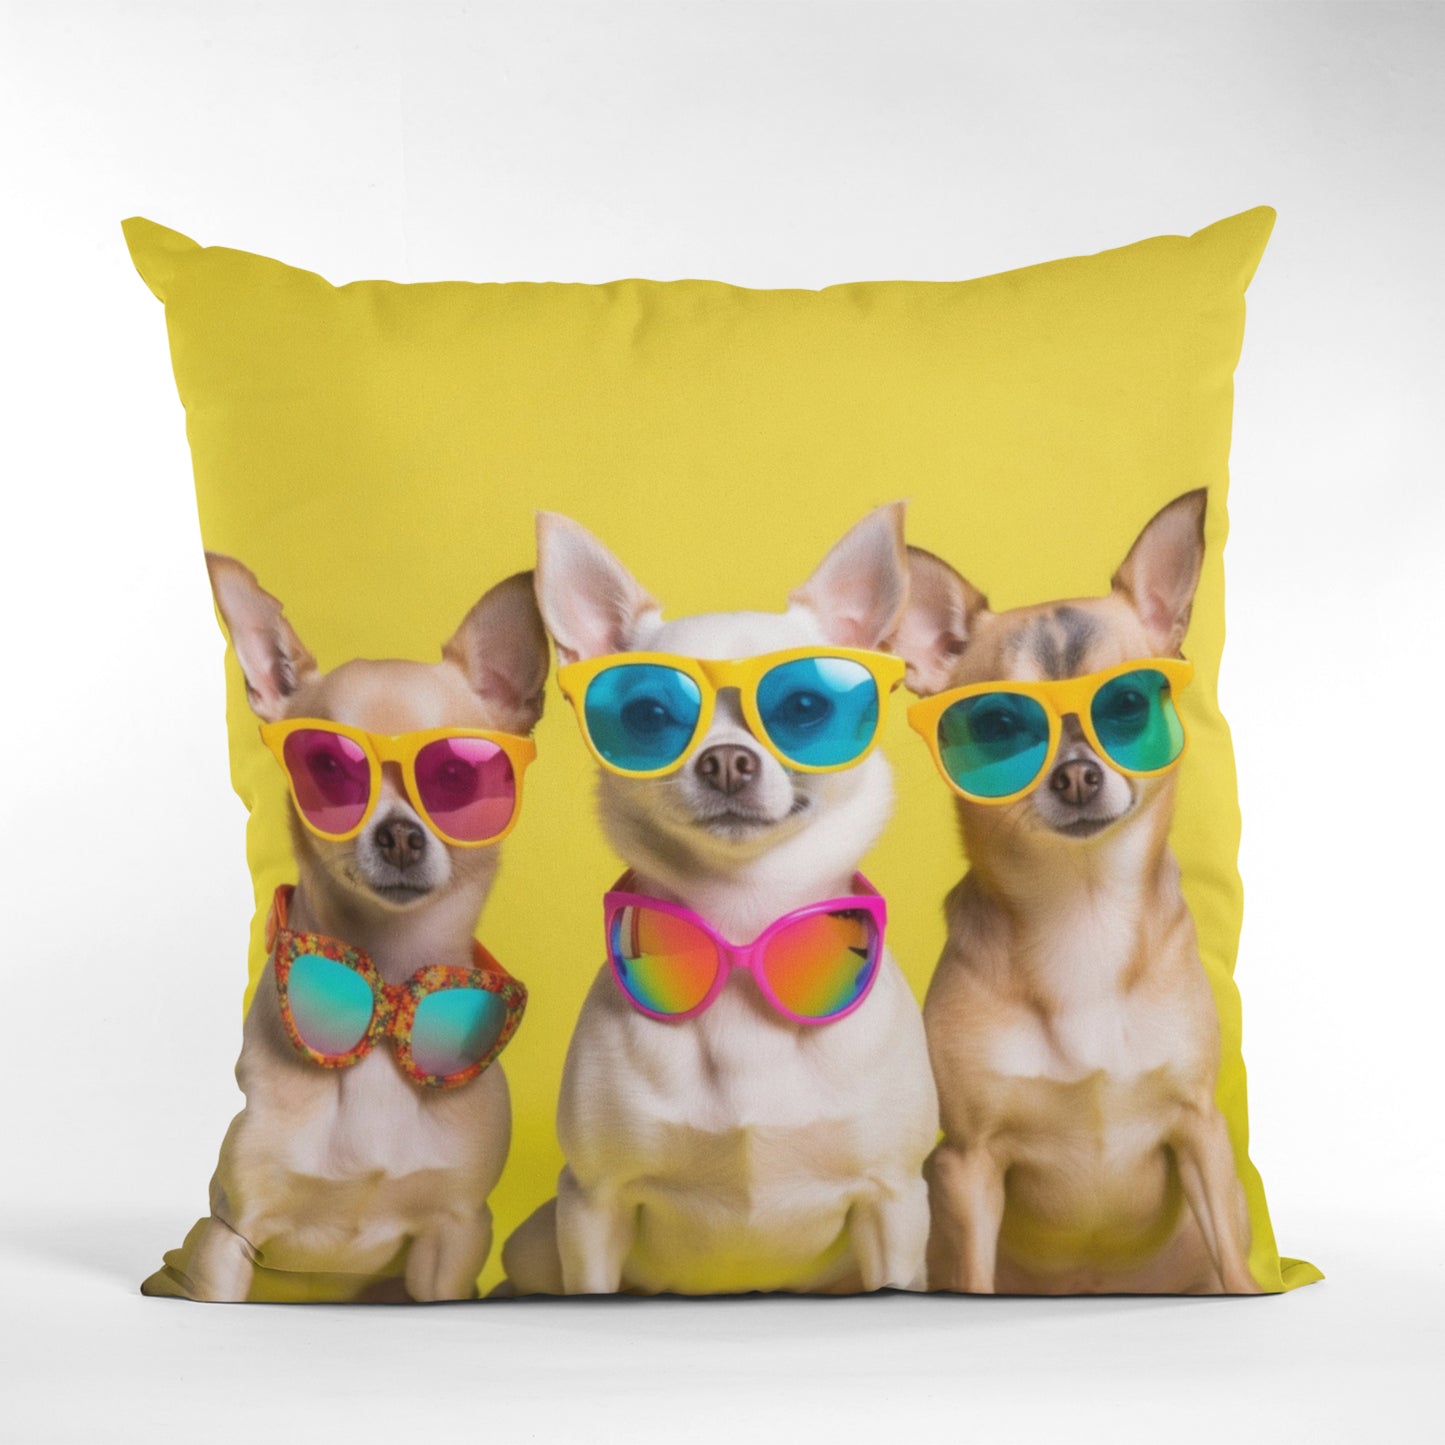 Adorable Chihuahua Decorative Cushion